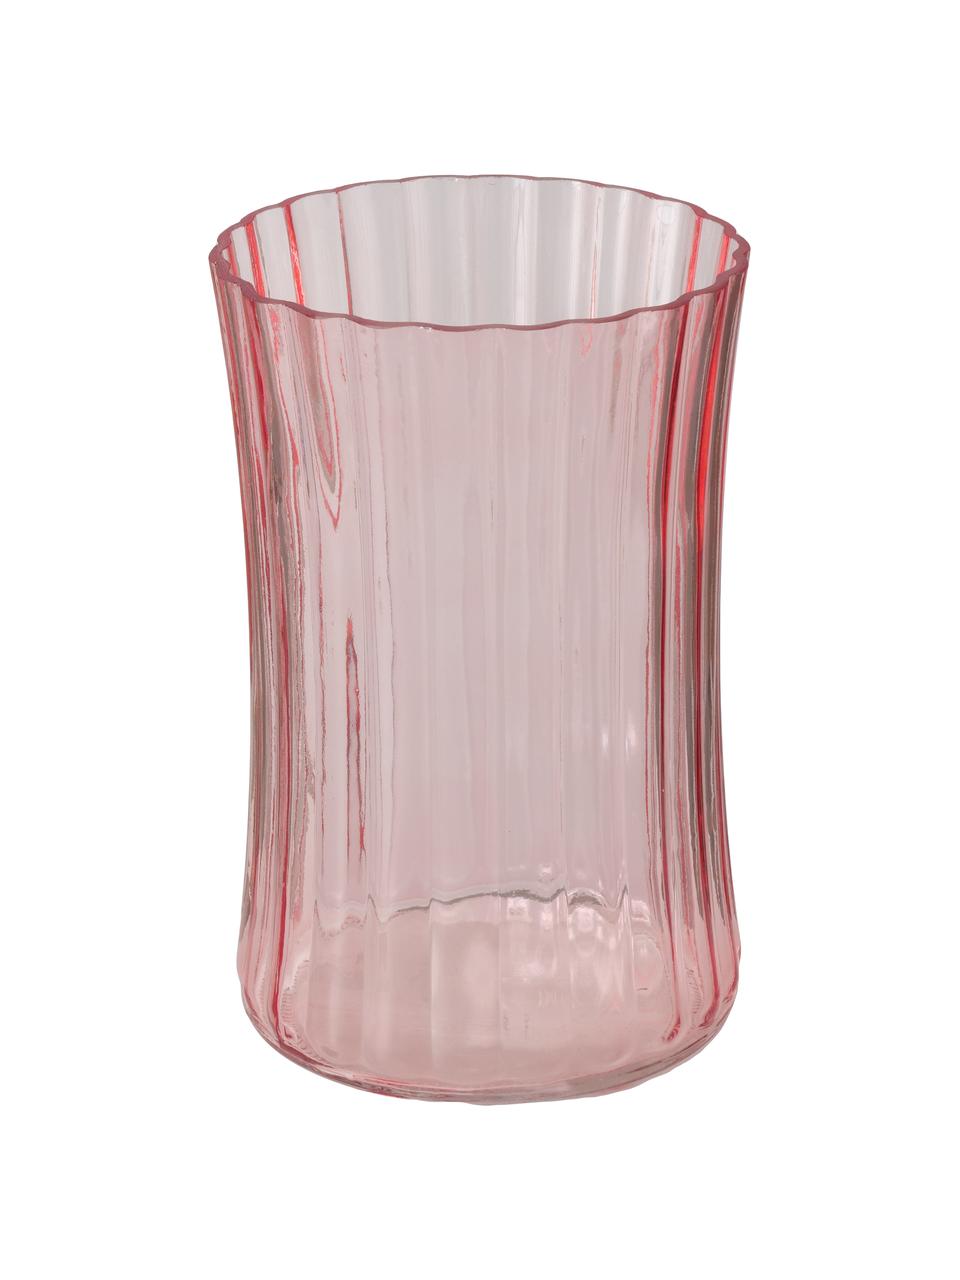 Glazen vazenset Malinia, 3-delig, Glas, Roze, transparant, Ø 13 x H 19 cm